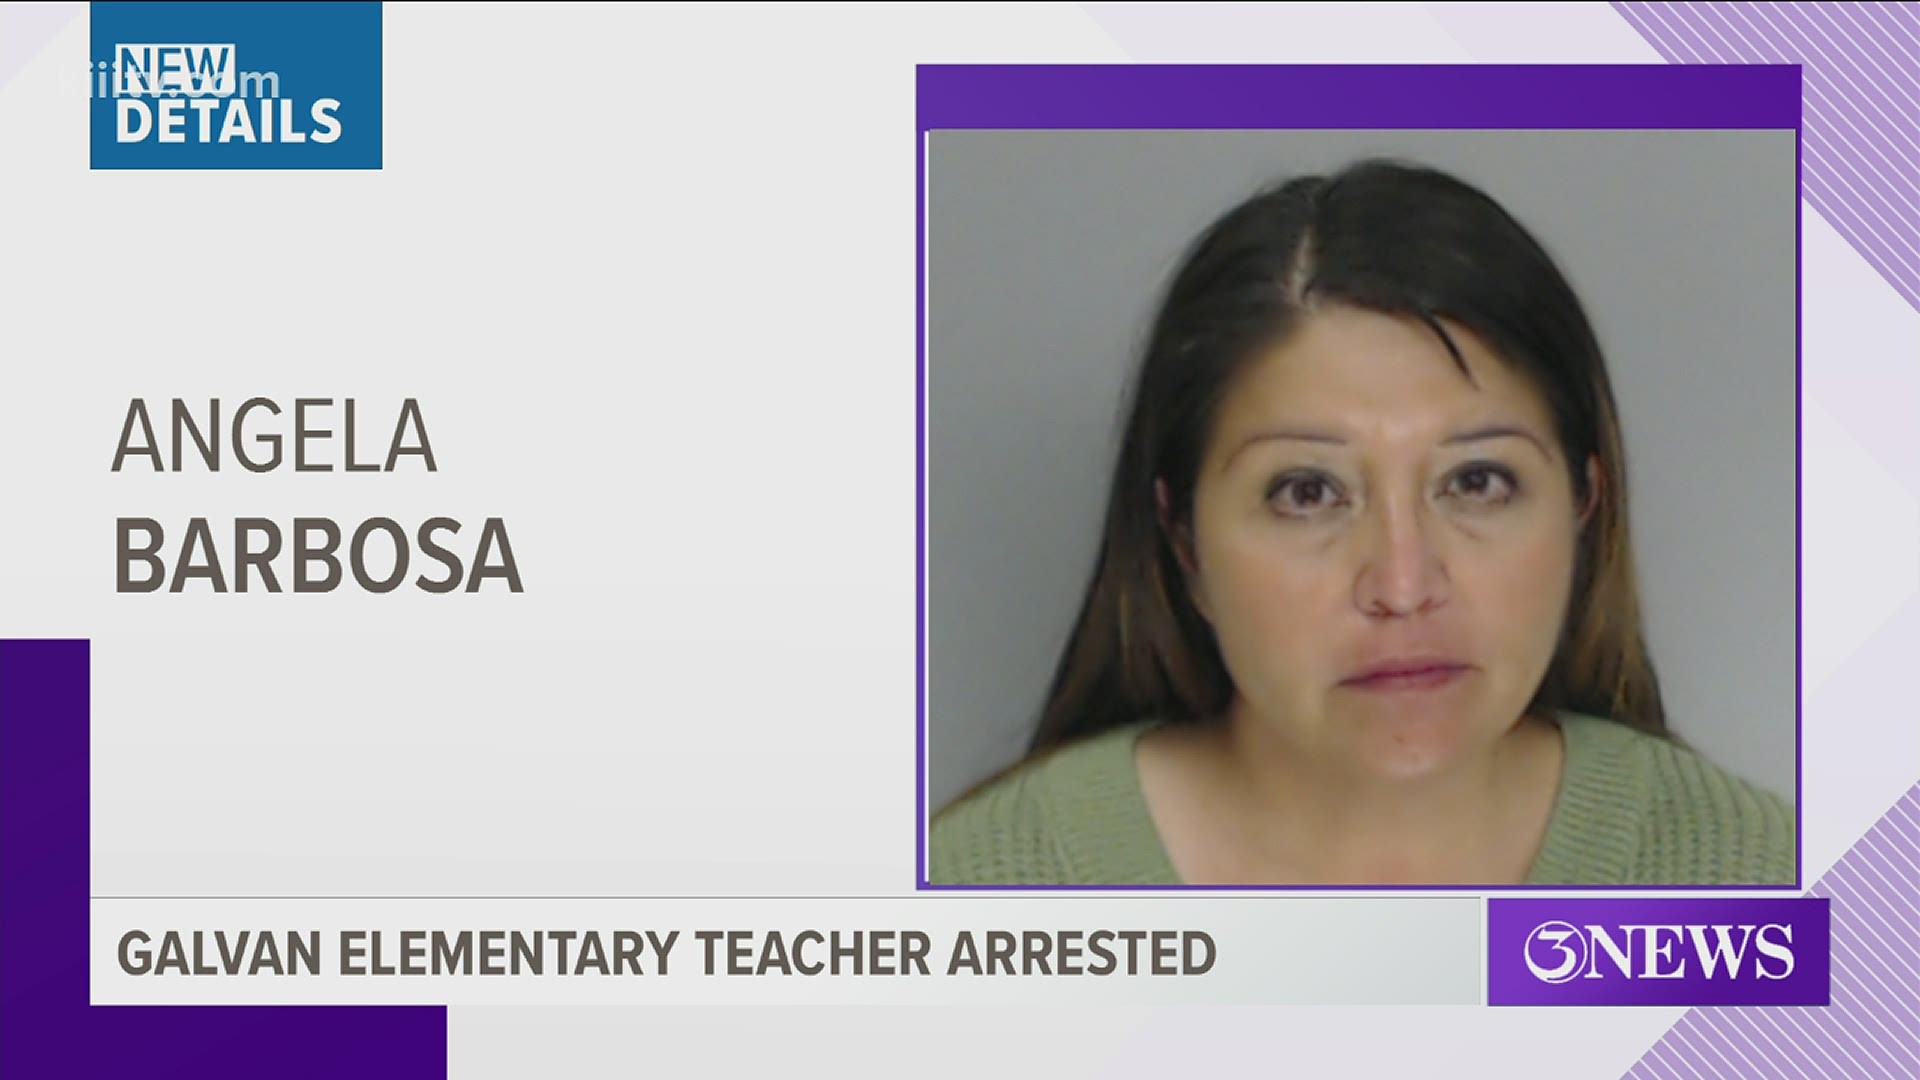 Monday, November 2 Corpus Christi Police arrested 45-year-old Corpus Christi elementary teacher Angela Barbosa.